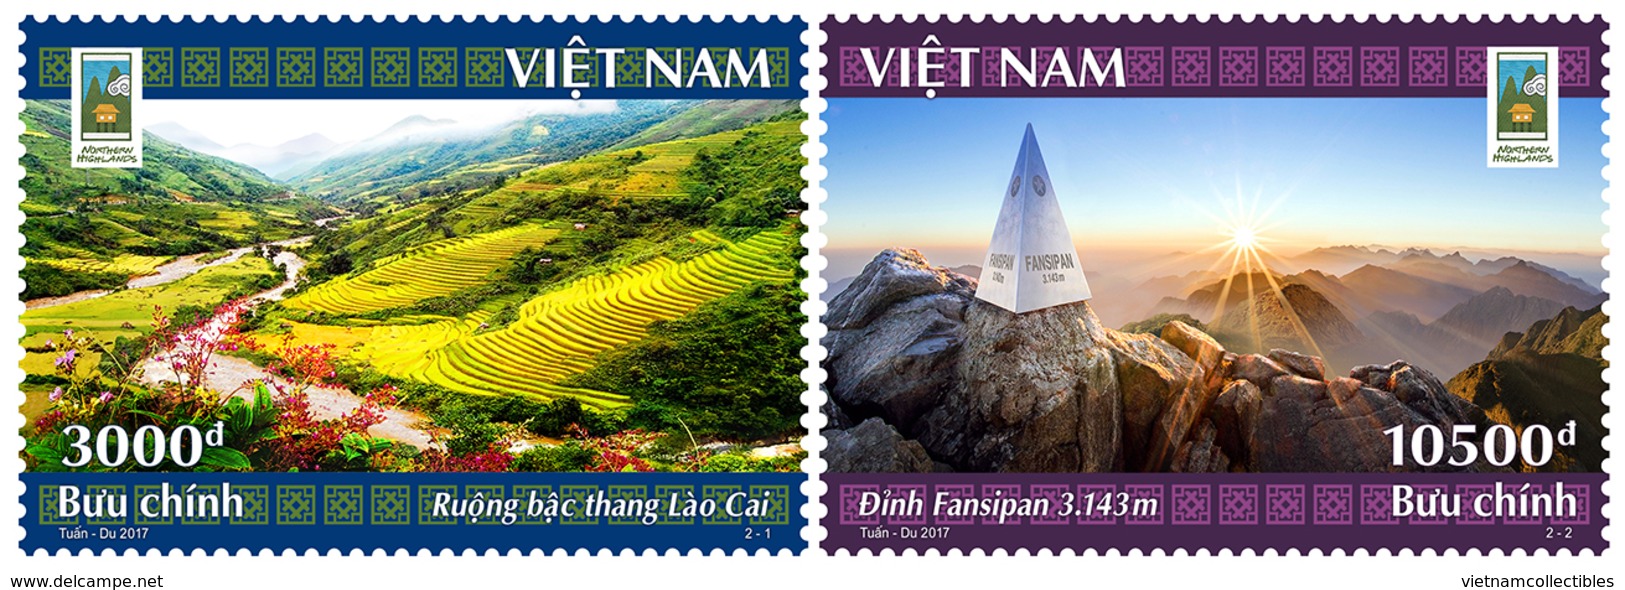 Viet Nam Vietnam MNH Stamps 2017 : Lao Cai National Tourism Year / Landscape / Fansipan Mountain Peak (Ms1075( - Vietnam